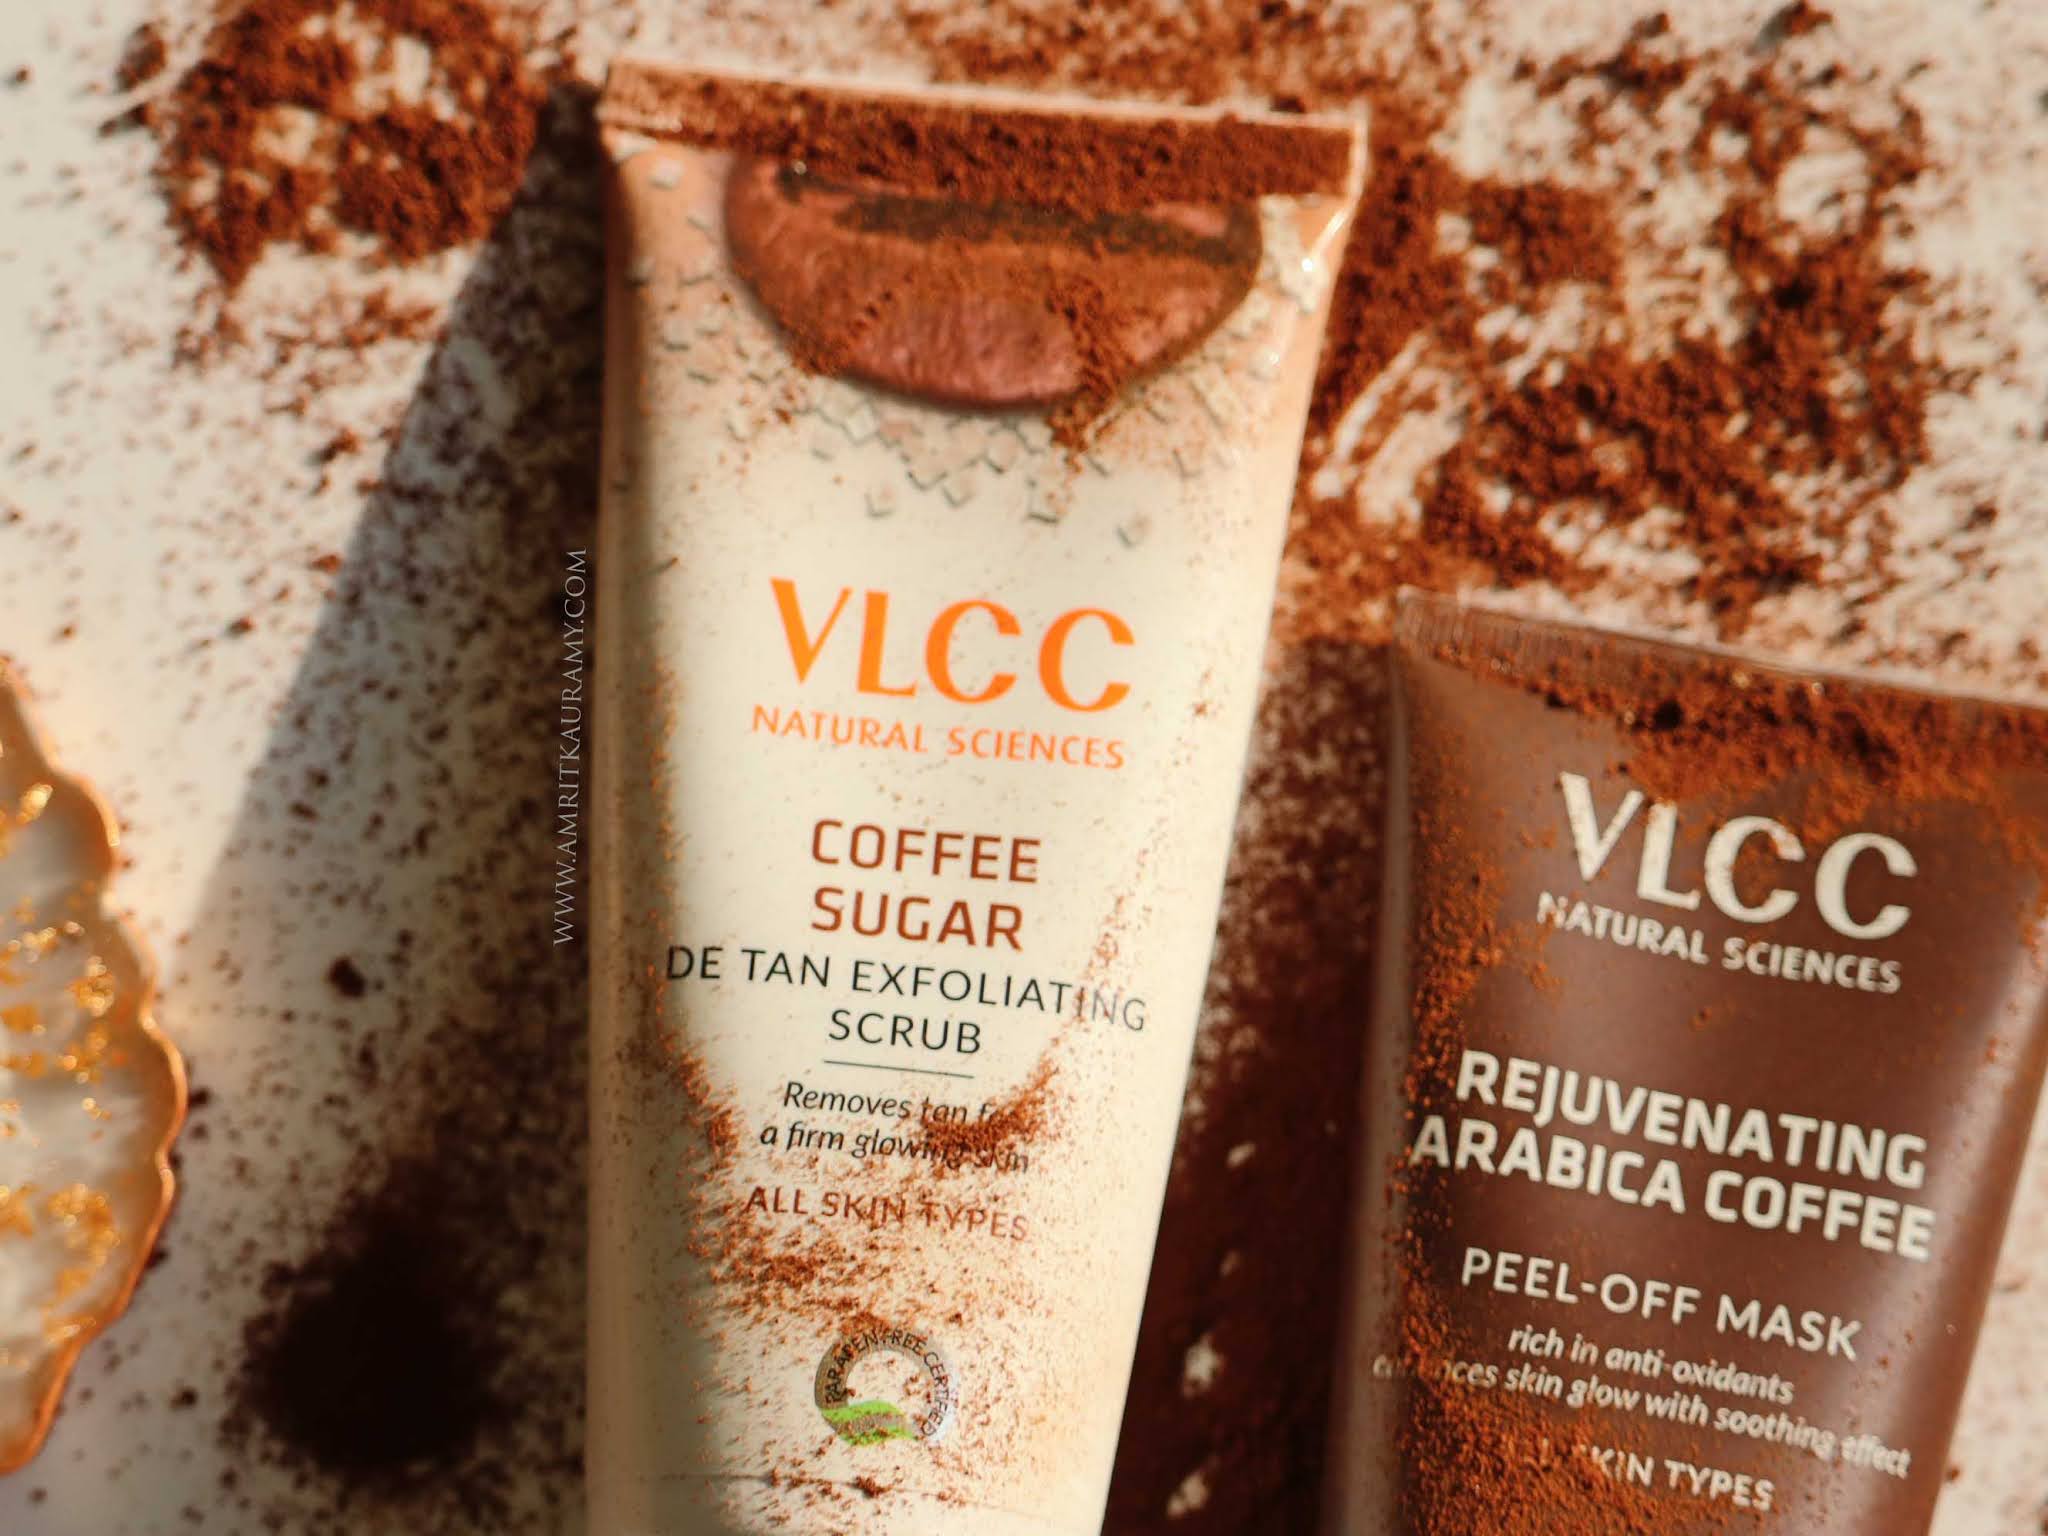 VLCC Coffee Sugar Scrub and Arabica Coffee Peel-off Mask